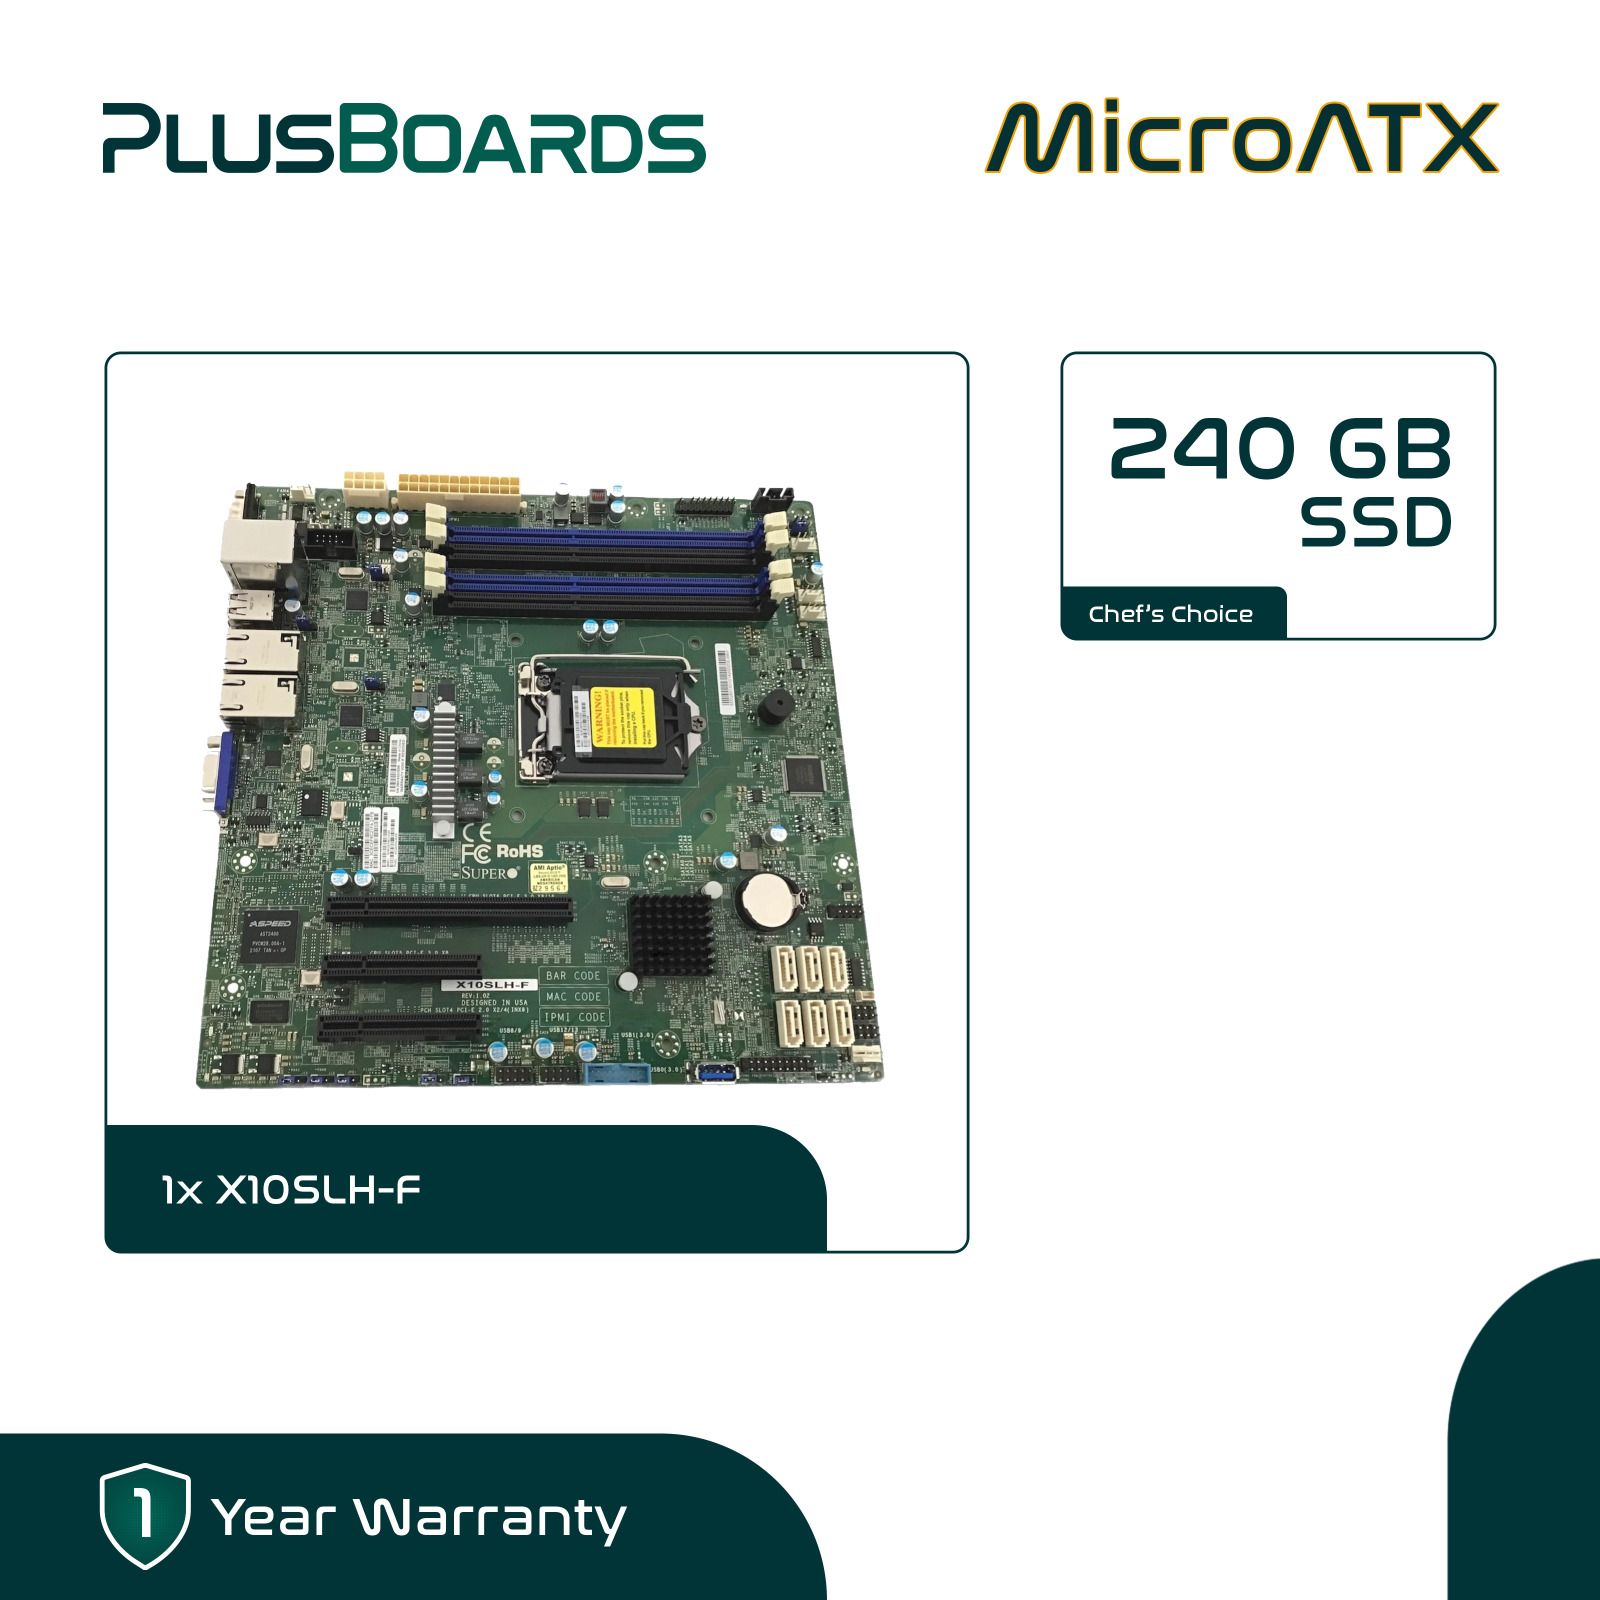 New Supermicro X10SLH-F Intel LGA1150 i3v4 C226 KVM IPMI MicroATX w/ Boot SSD